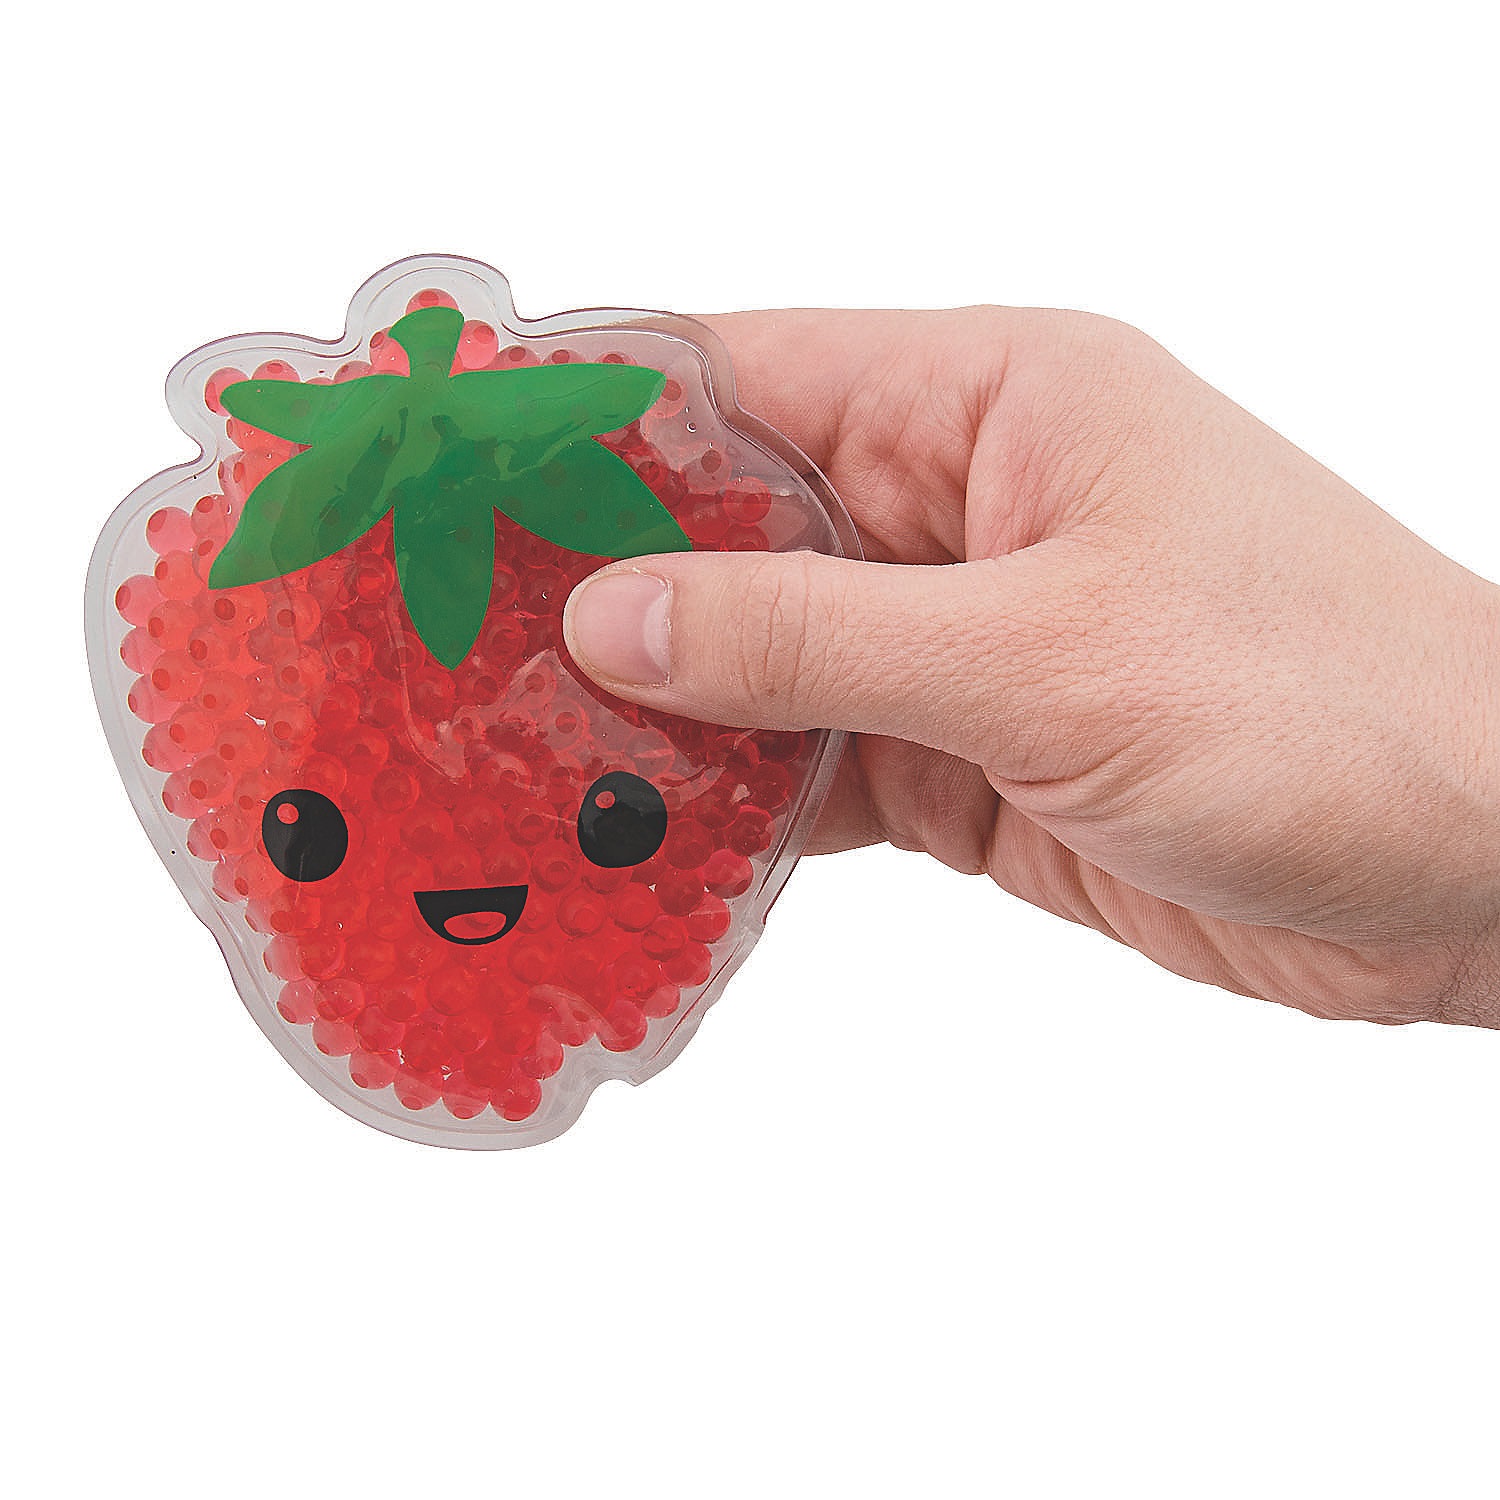 strawberry-gel-beads-sensory-shapes-12-pc-_13937834-a01